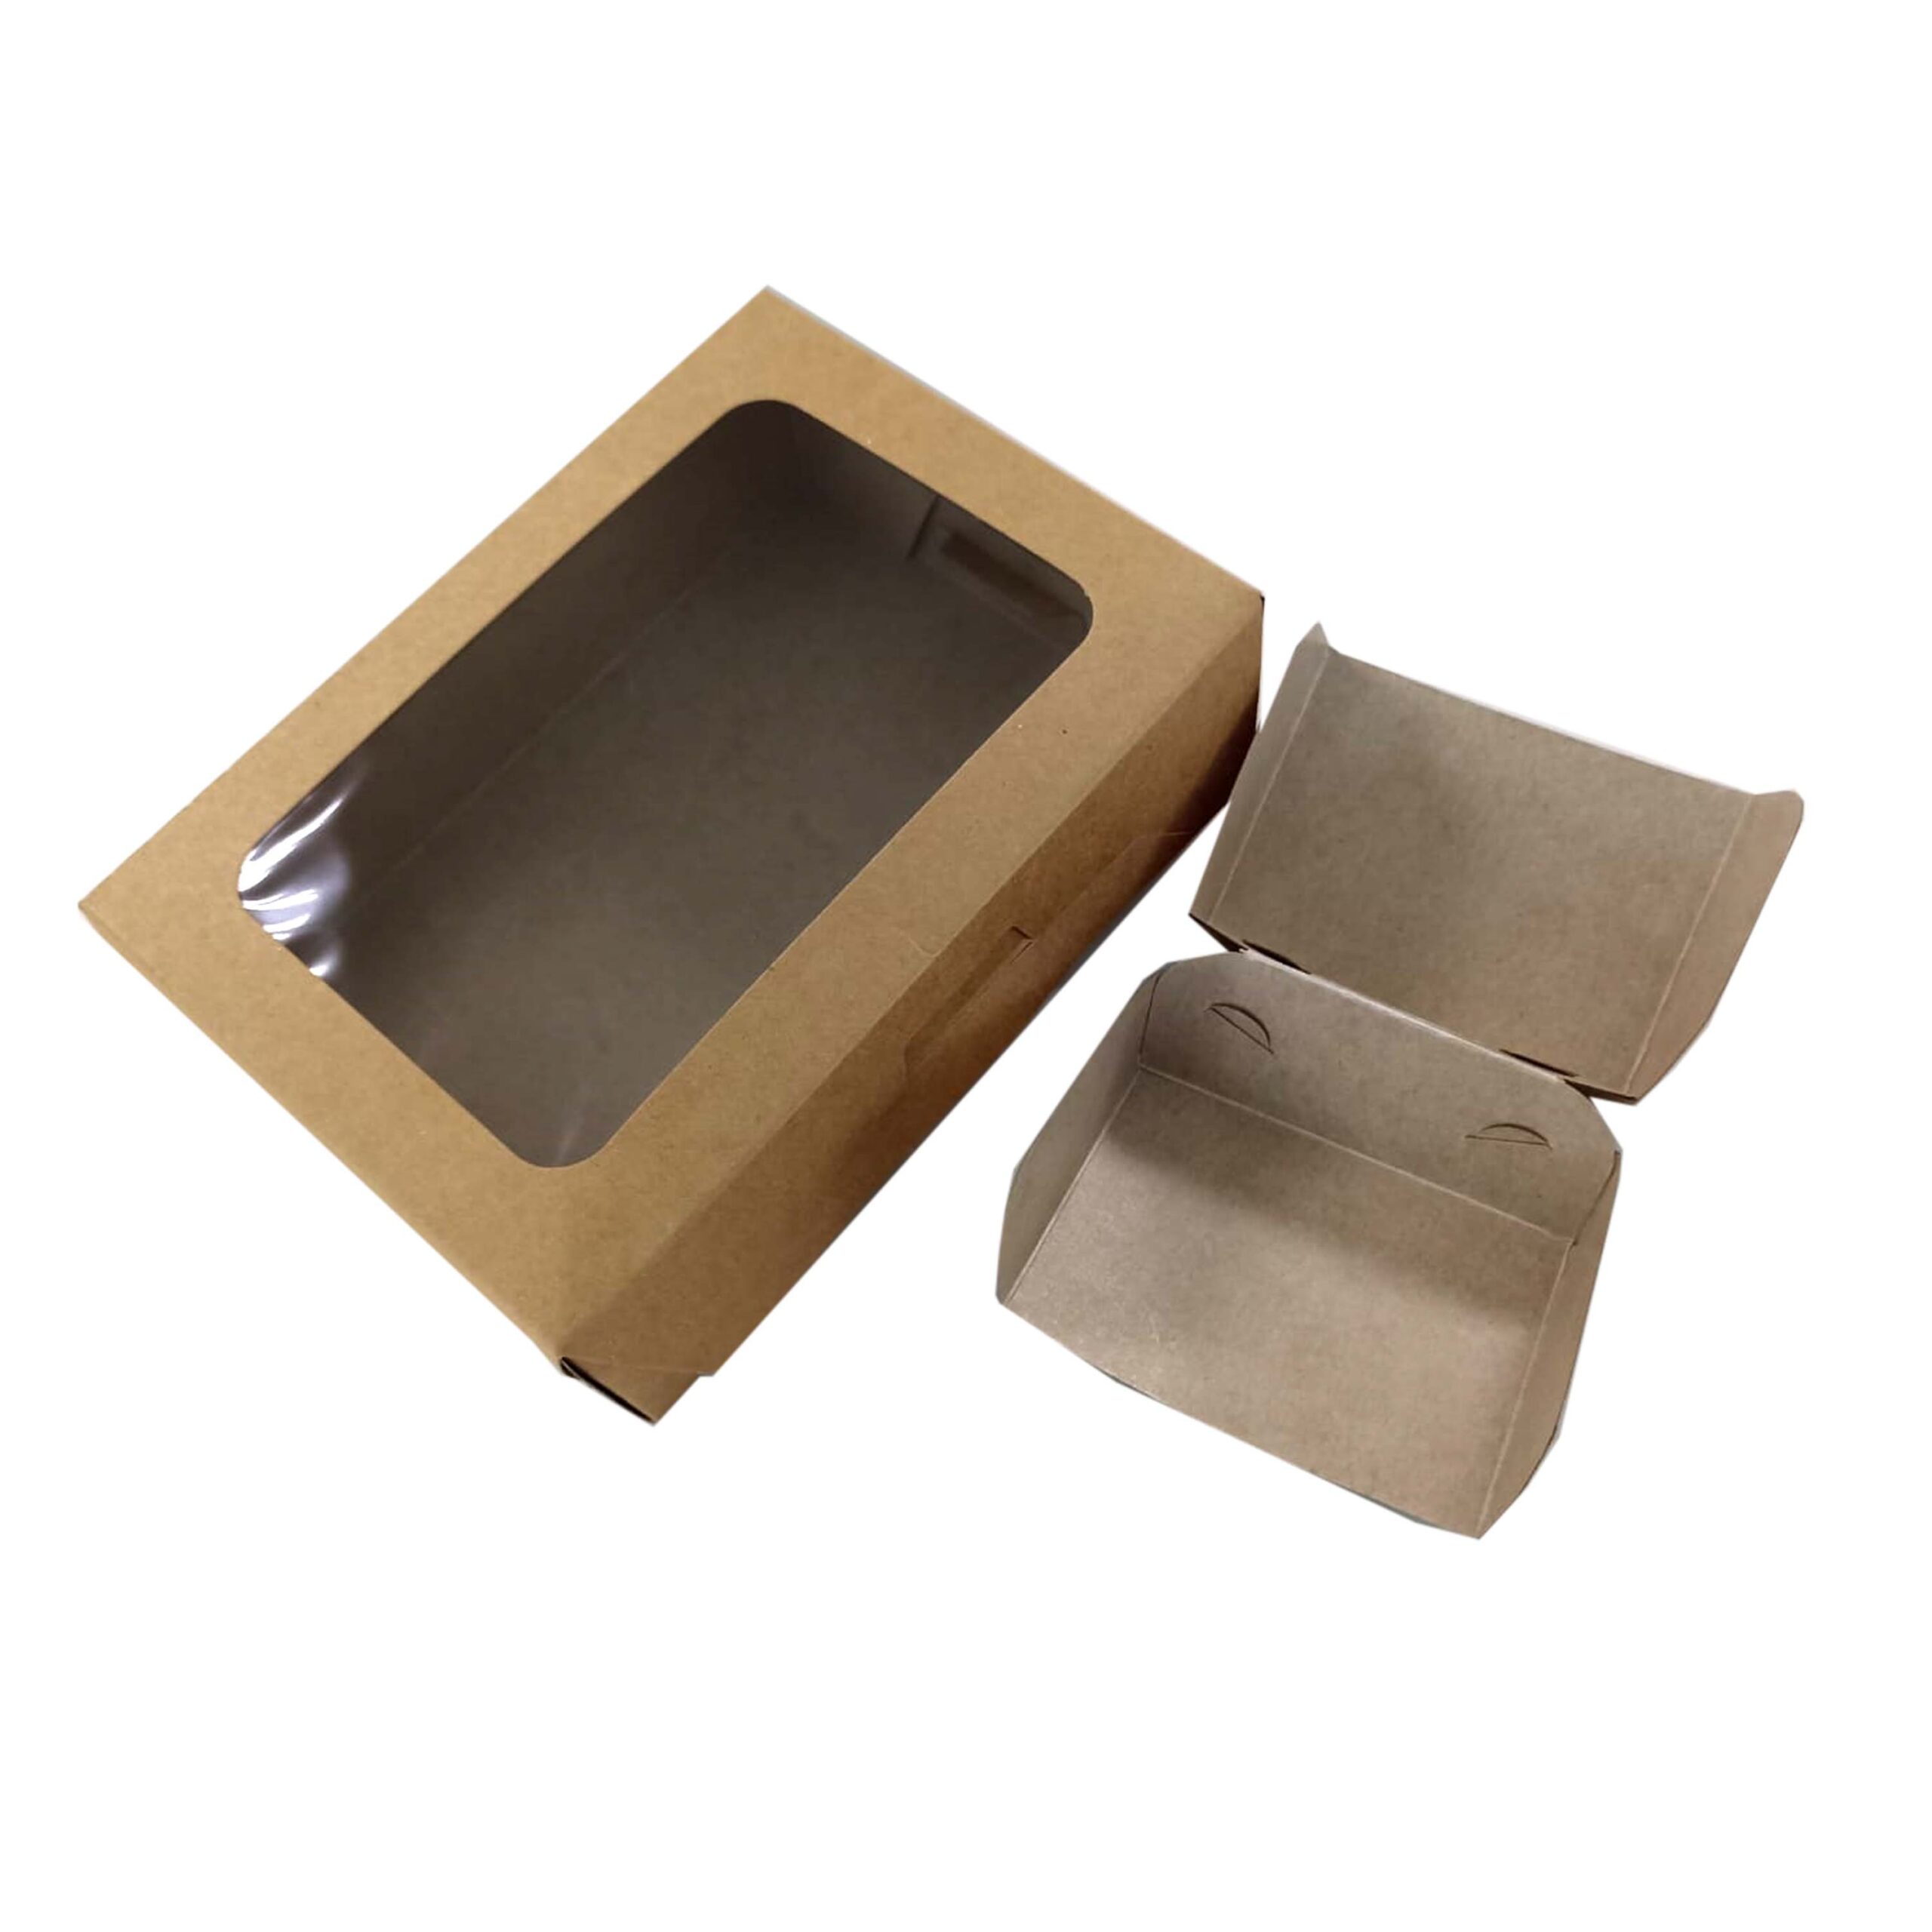 PACK(25) SUSHI
BOX KRAFT WITH
WINDOW+4DIV
INSERTS 
20x14x7cm